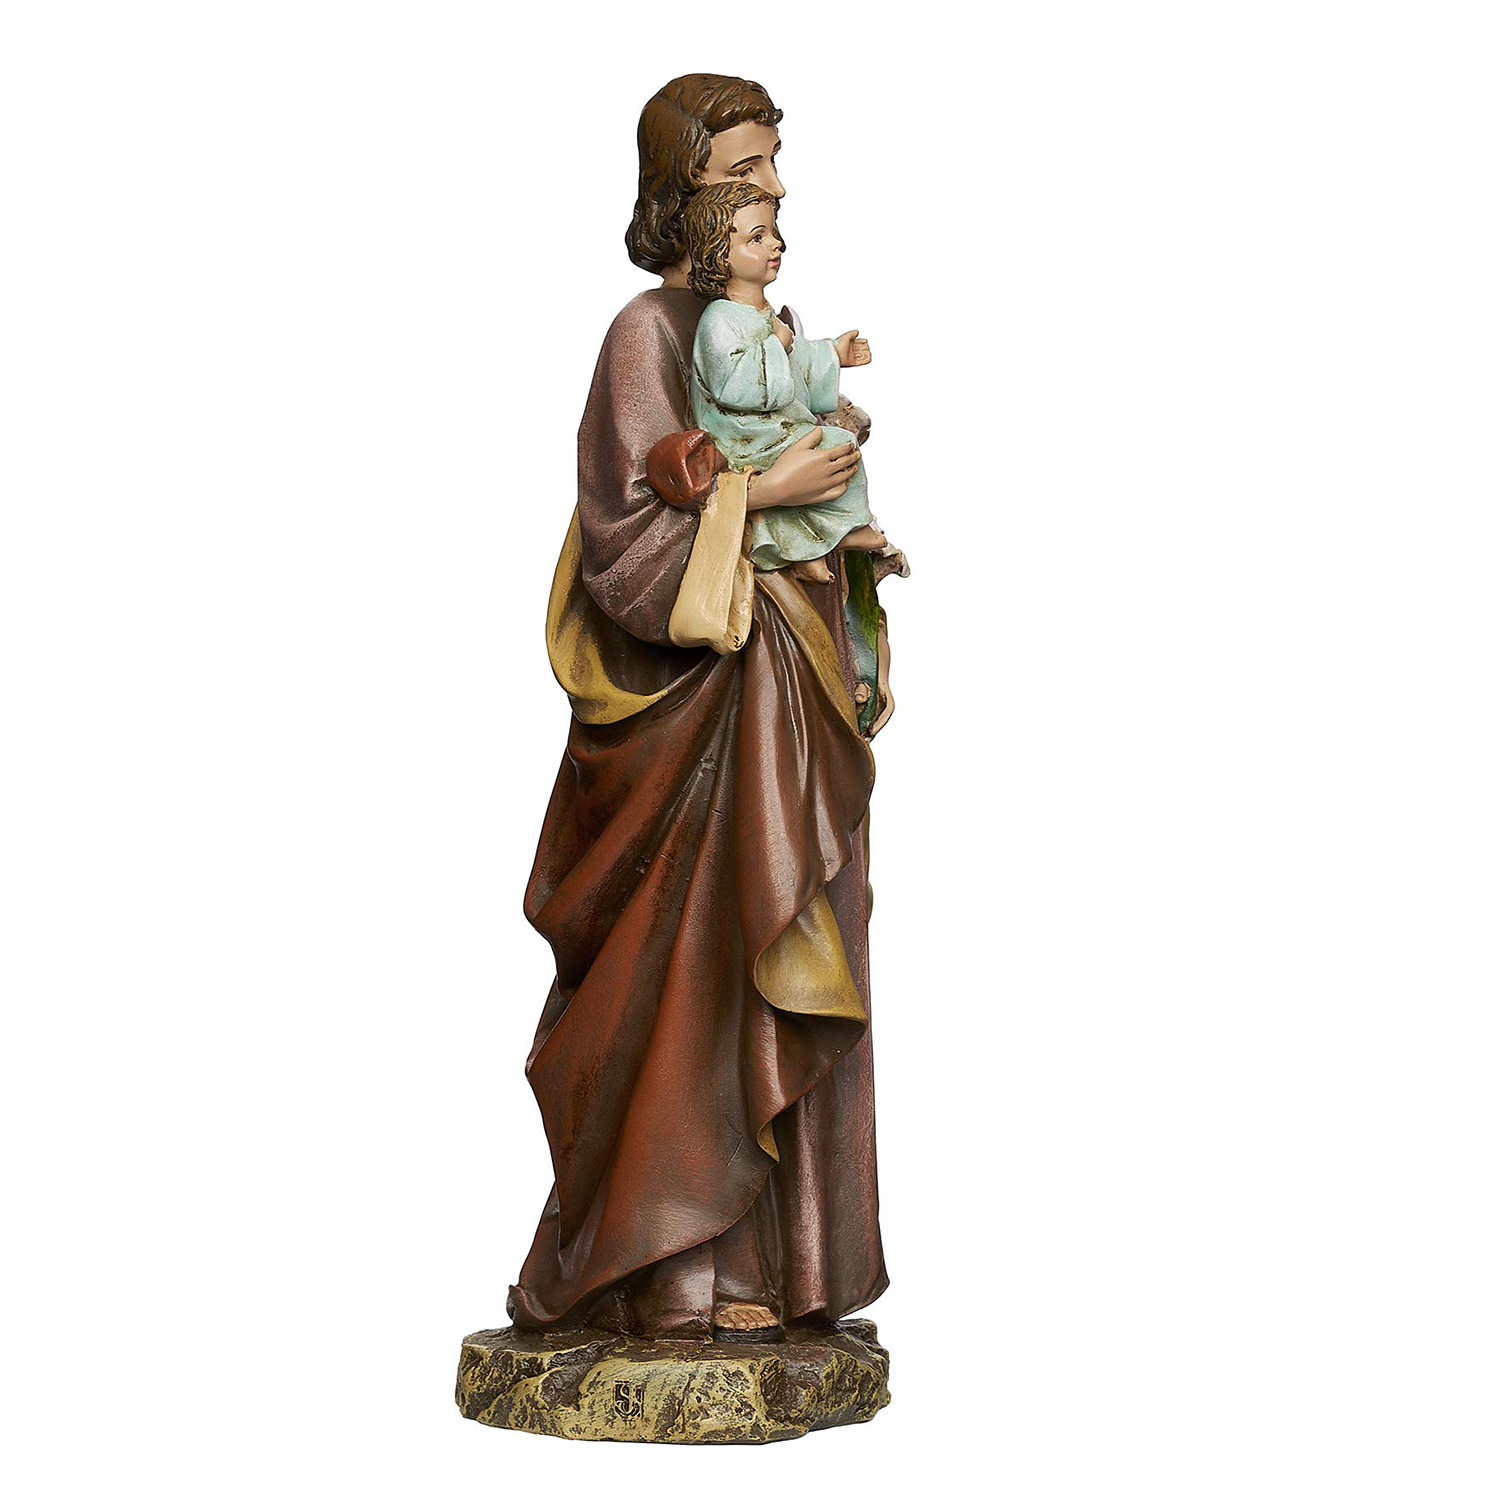 Joseph and Jesus Statue